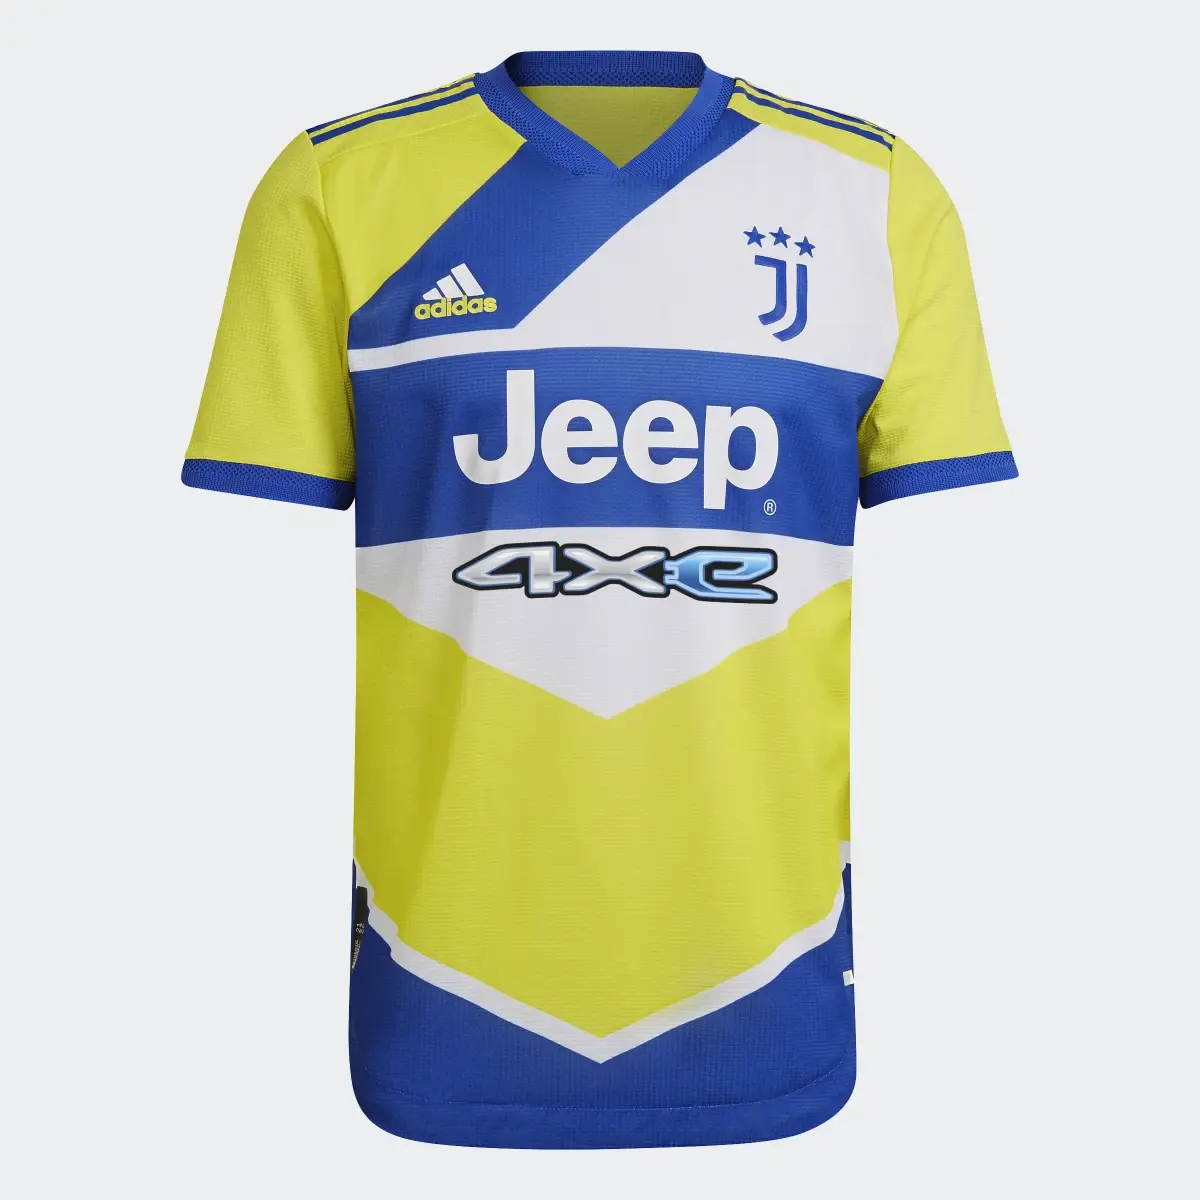 Adidas Jersey Tercer Uniforme Oficial Juventus 21/22. 1